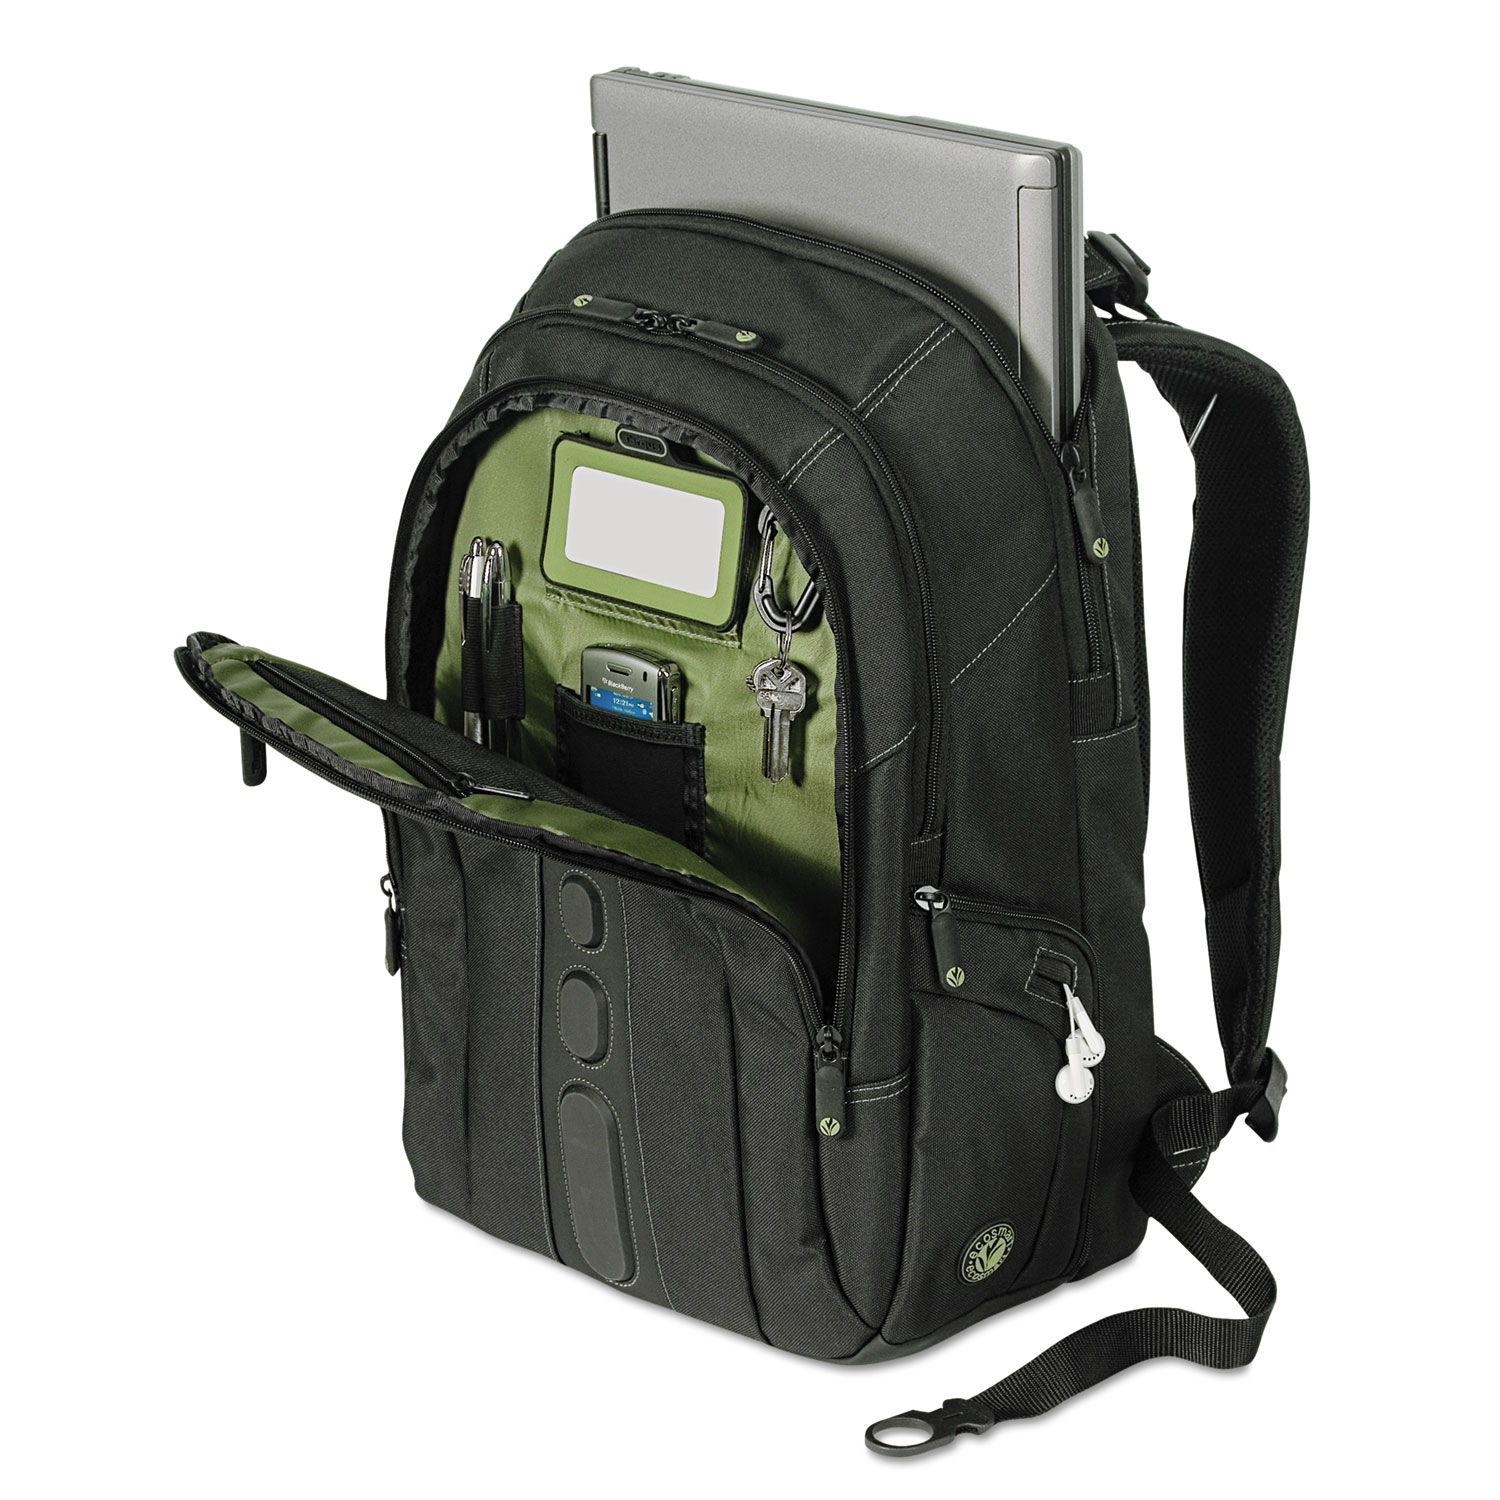 Spruce Ecosmart Backpack 17 Laptop, 19 1/2 x 13 x 6 3/4, Black